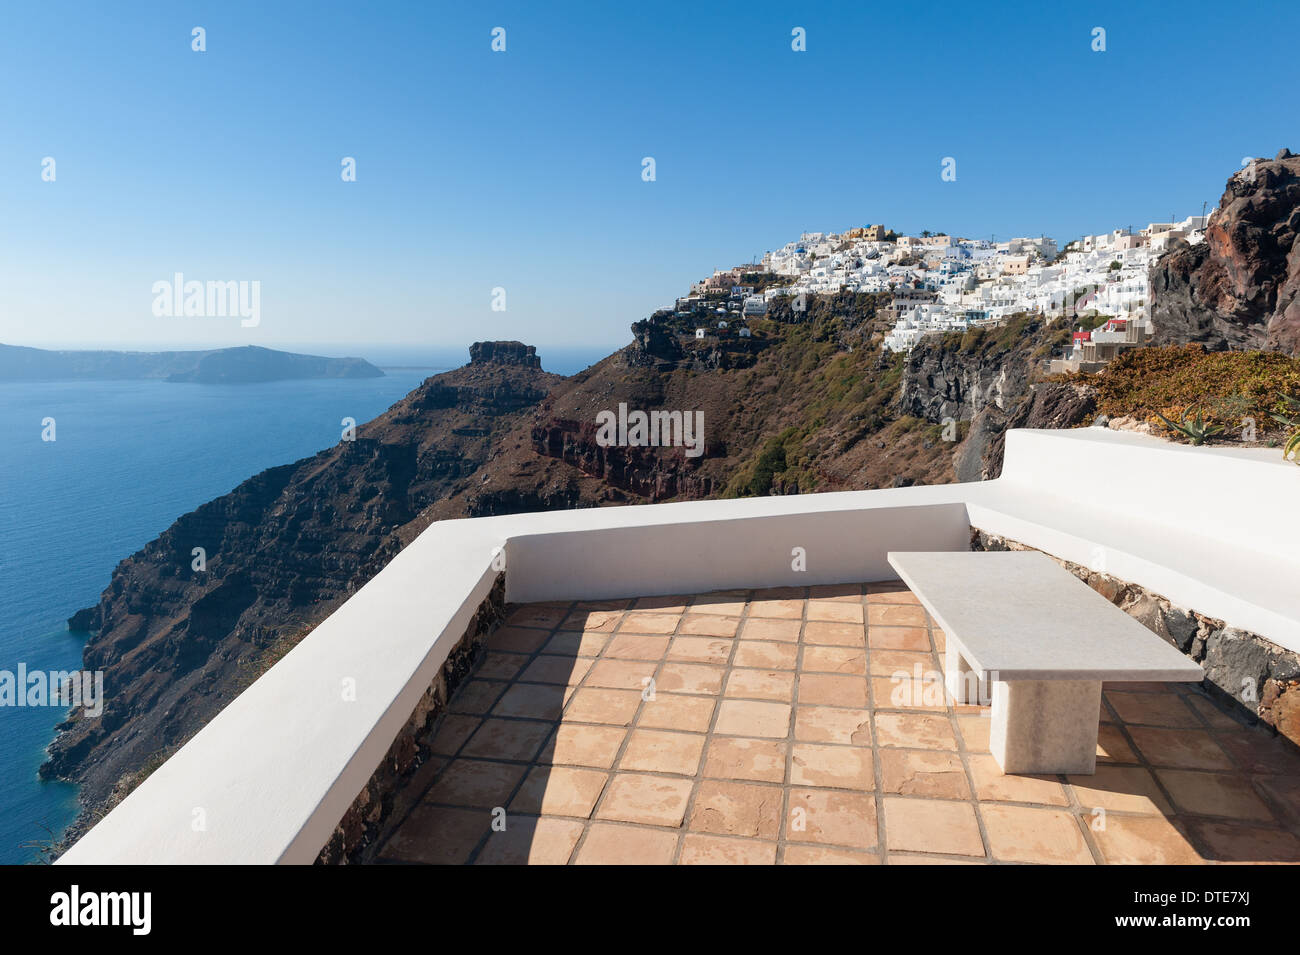 Bench overlooking Caldera of Santorini Greece Stock Photo